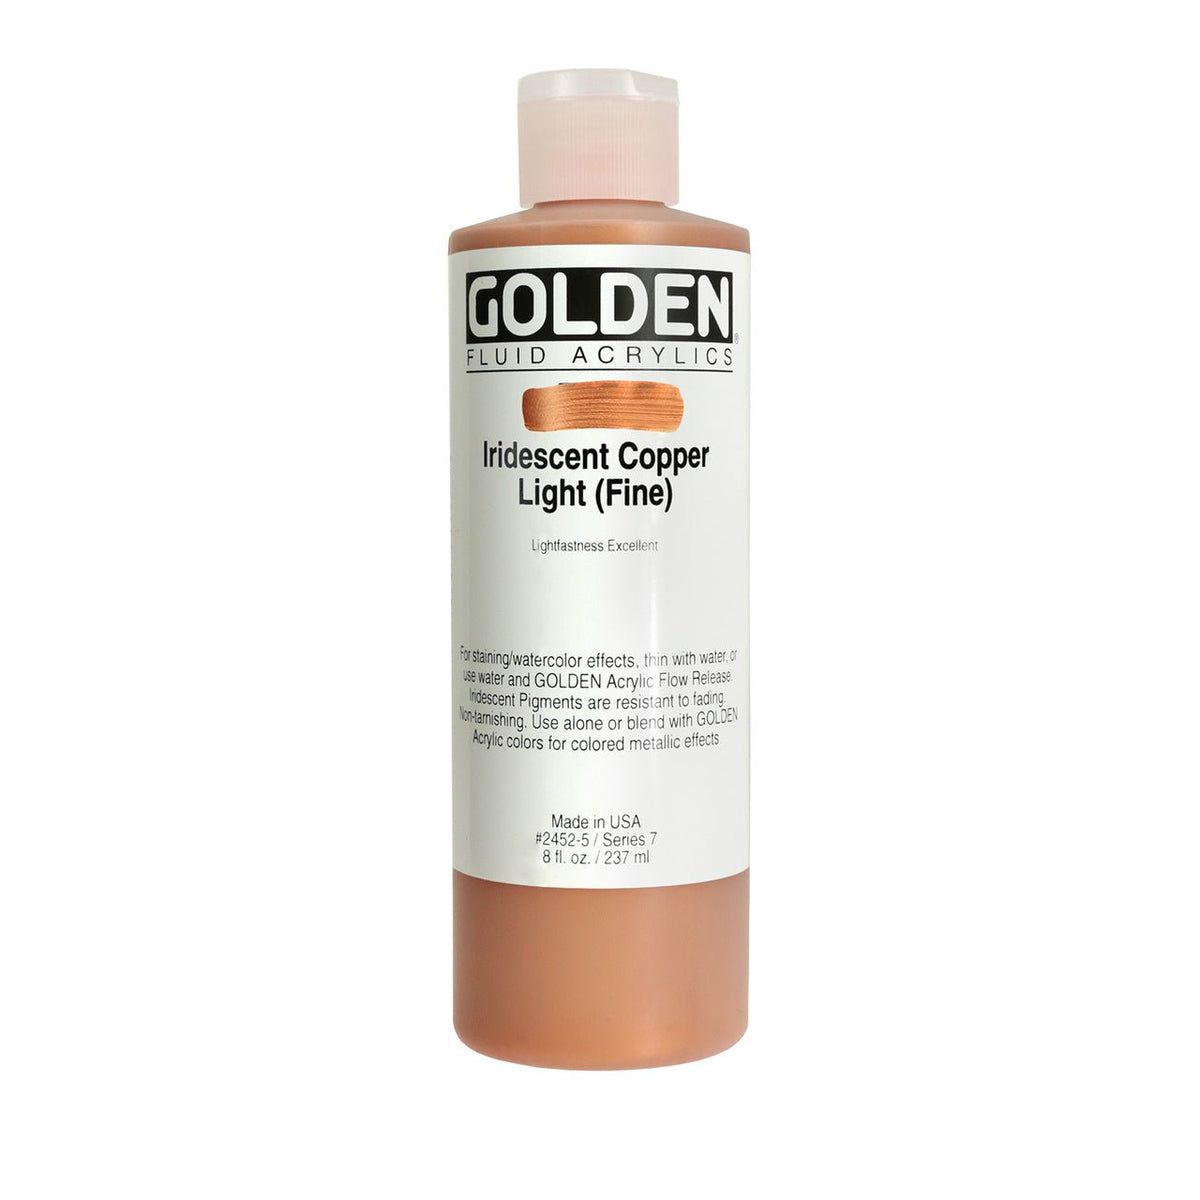 Golden Fluid Acrylic Iridescent Copper Light (fine) 8 oz - merriartist.com